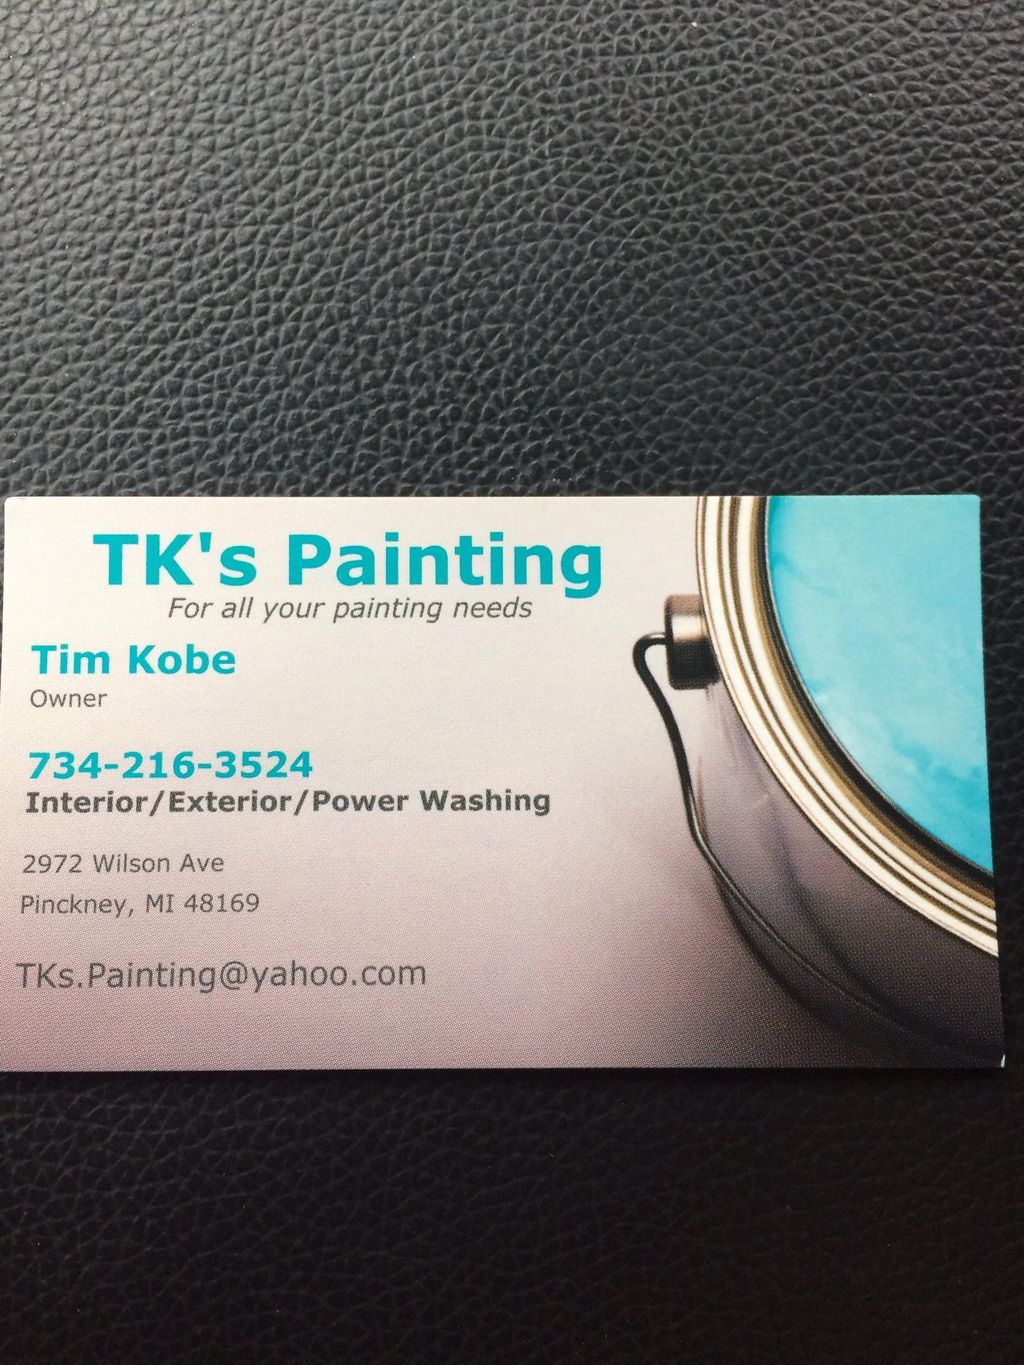 TK's painting